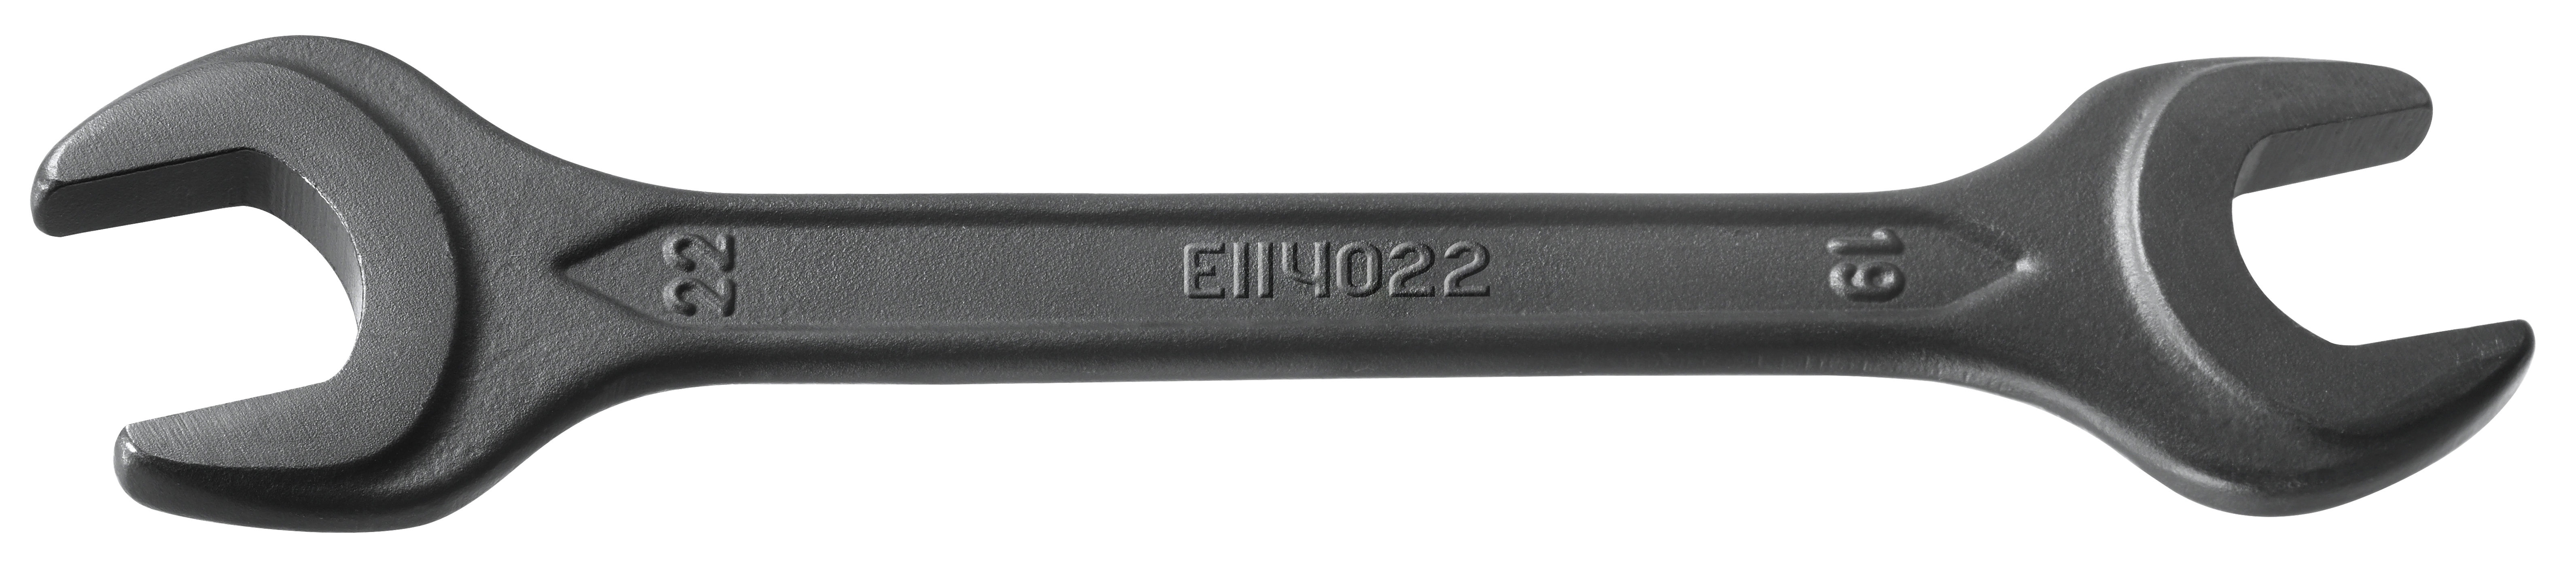 1.E114025 Impact steeksleutel din 24x27 mm